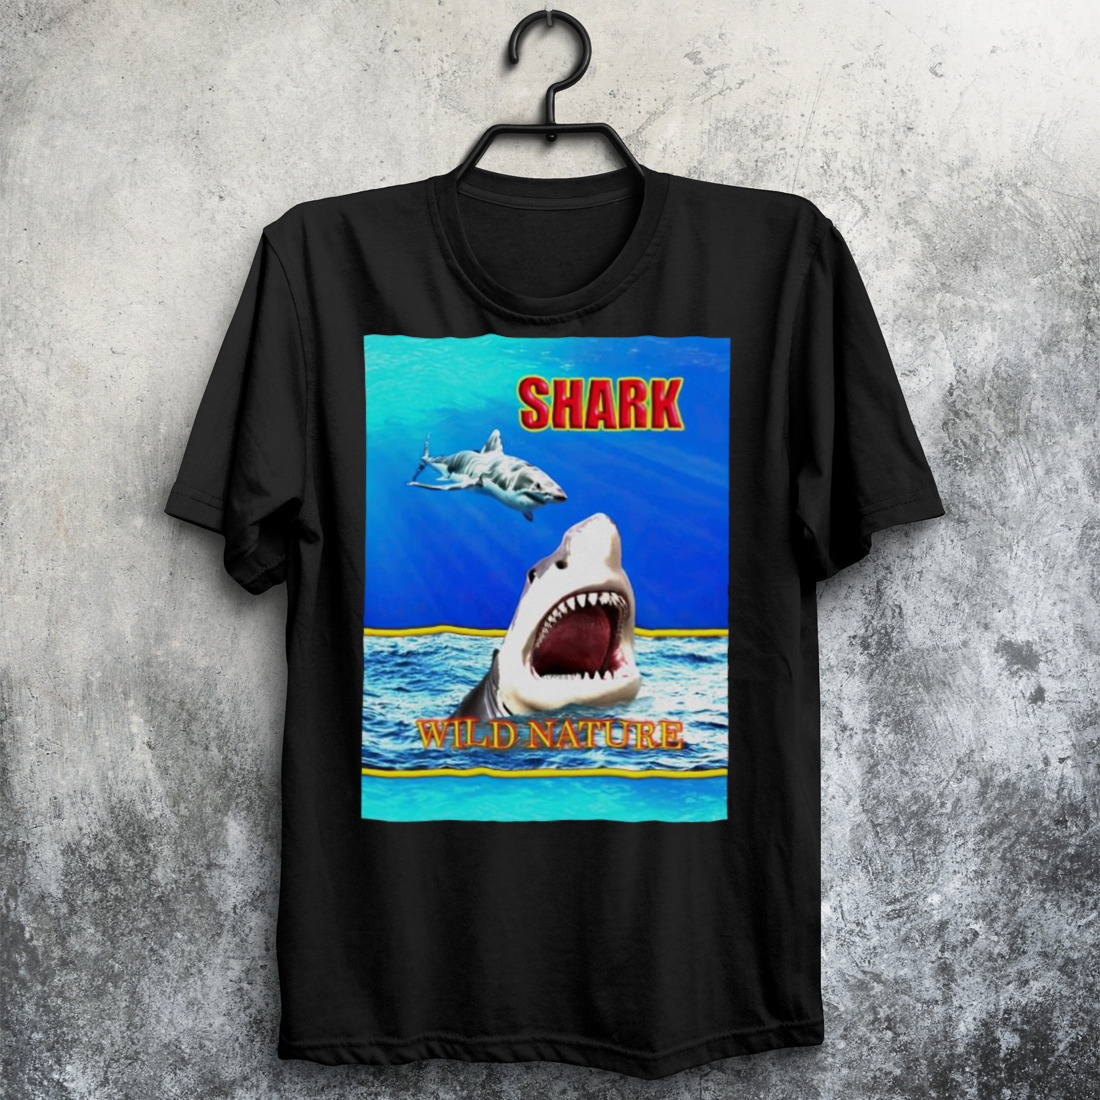 Wild nature shark shirt